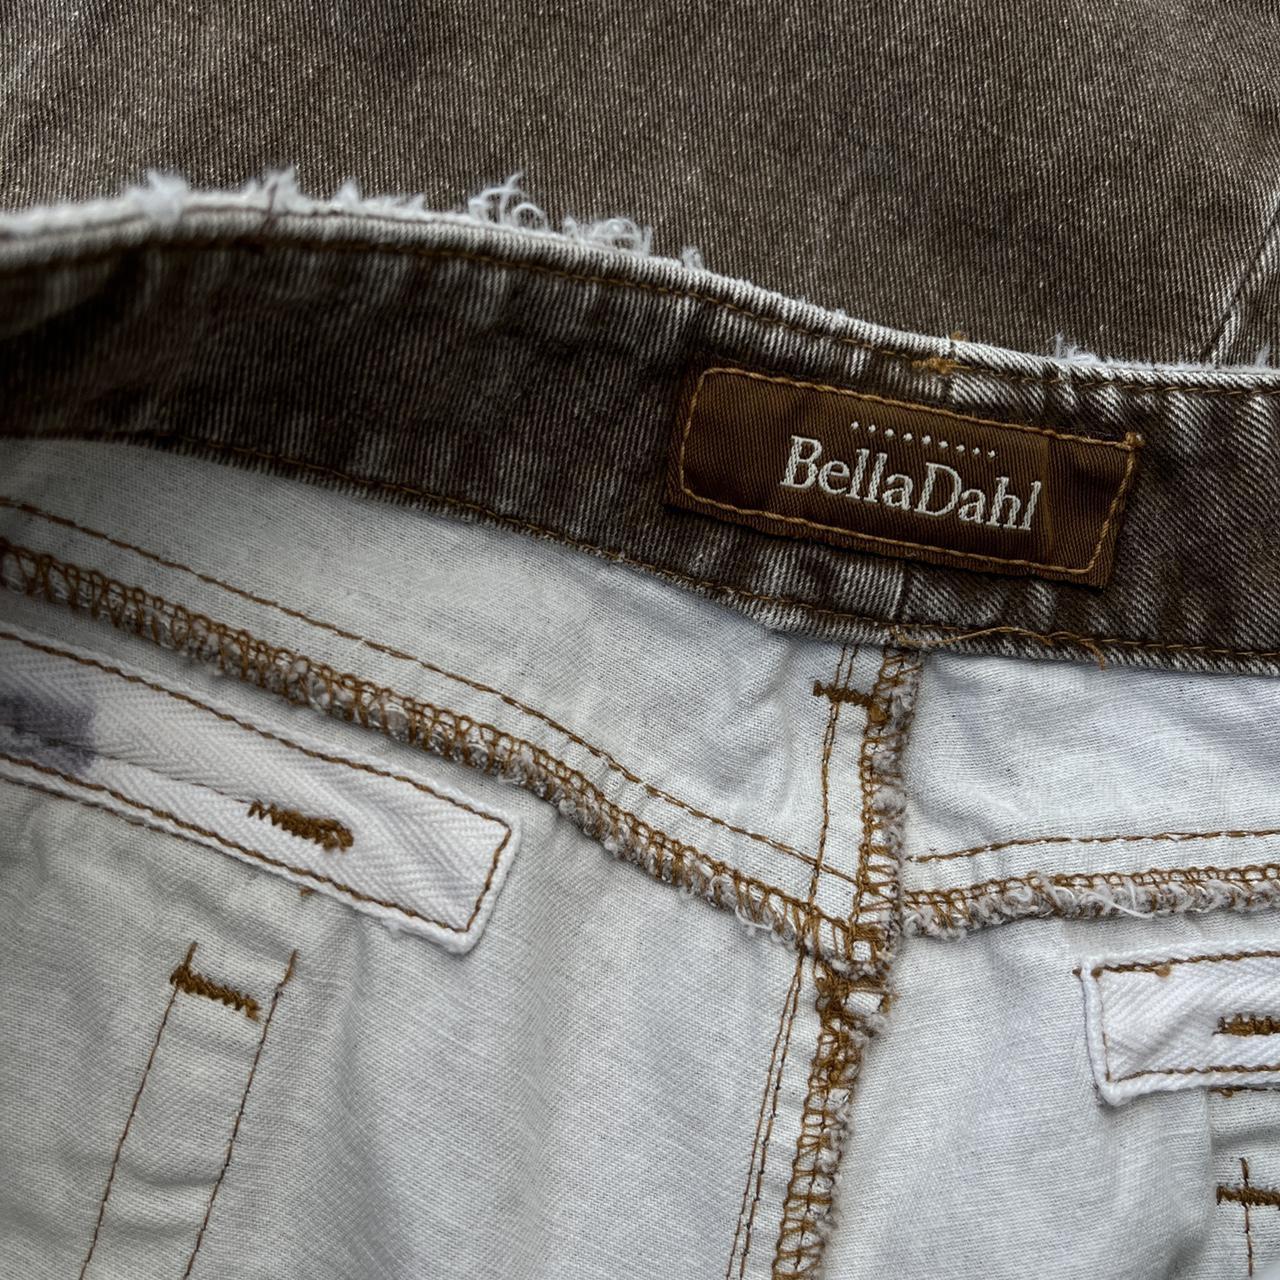 Product Image 4 - Brown Flared Pants

•Women’s Vintage BellaDahl